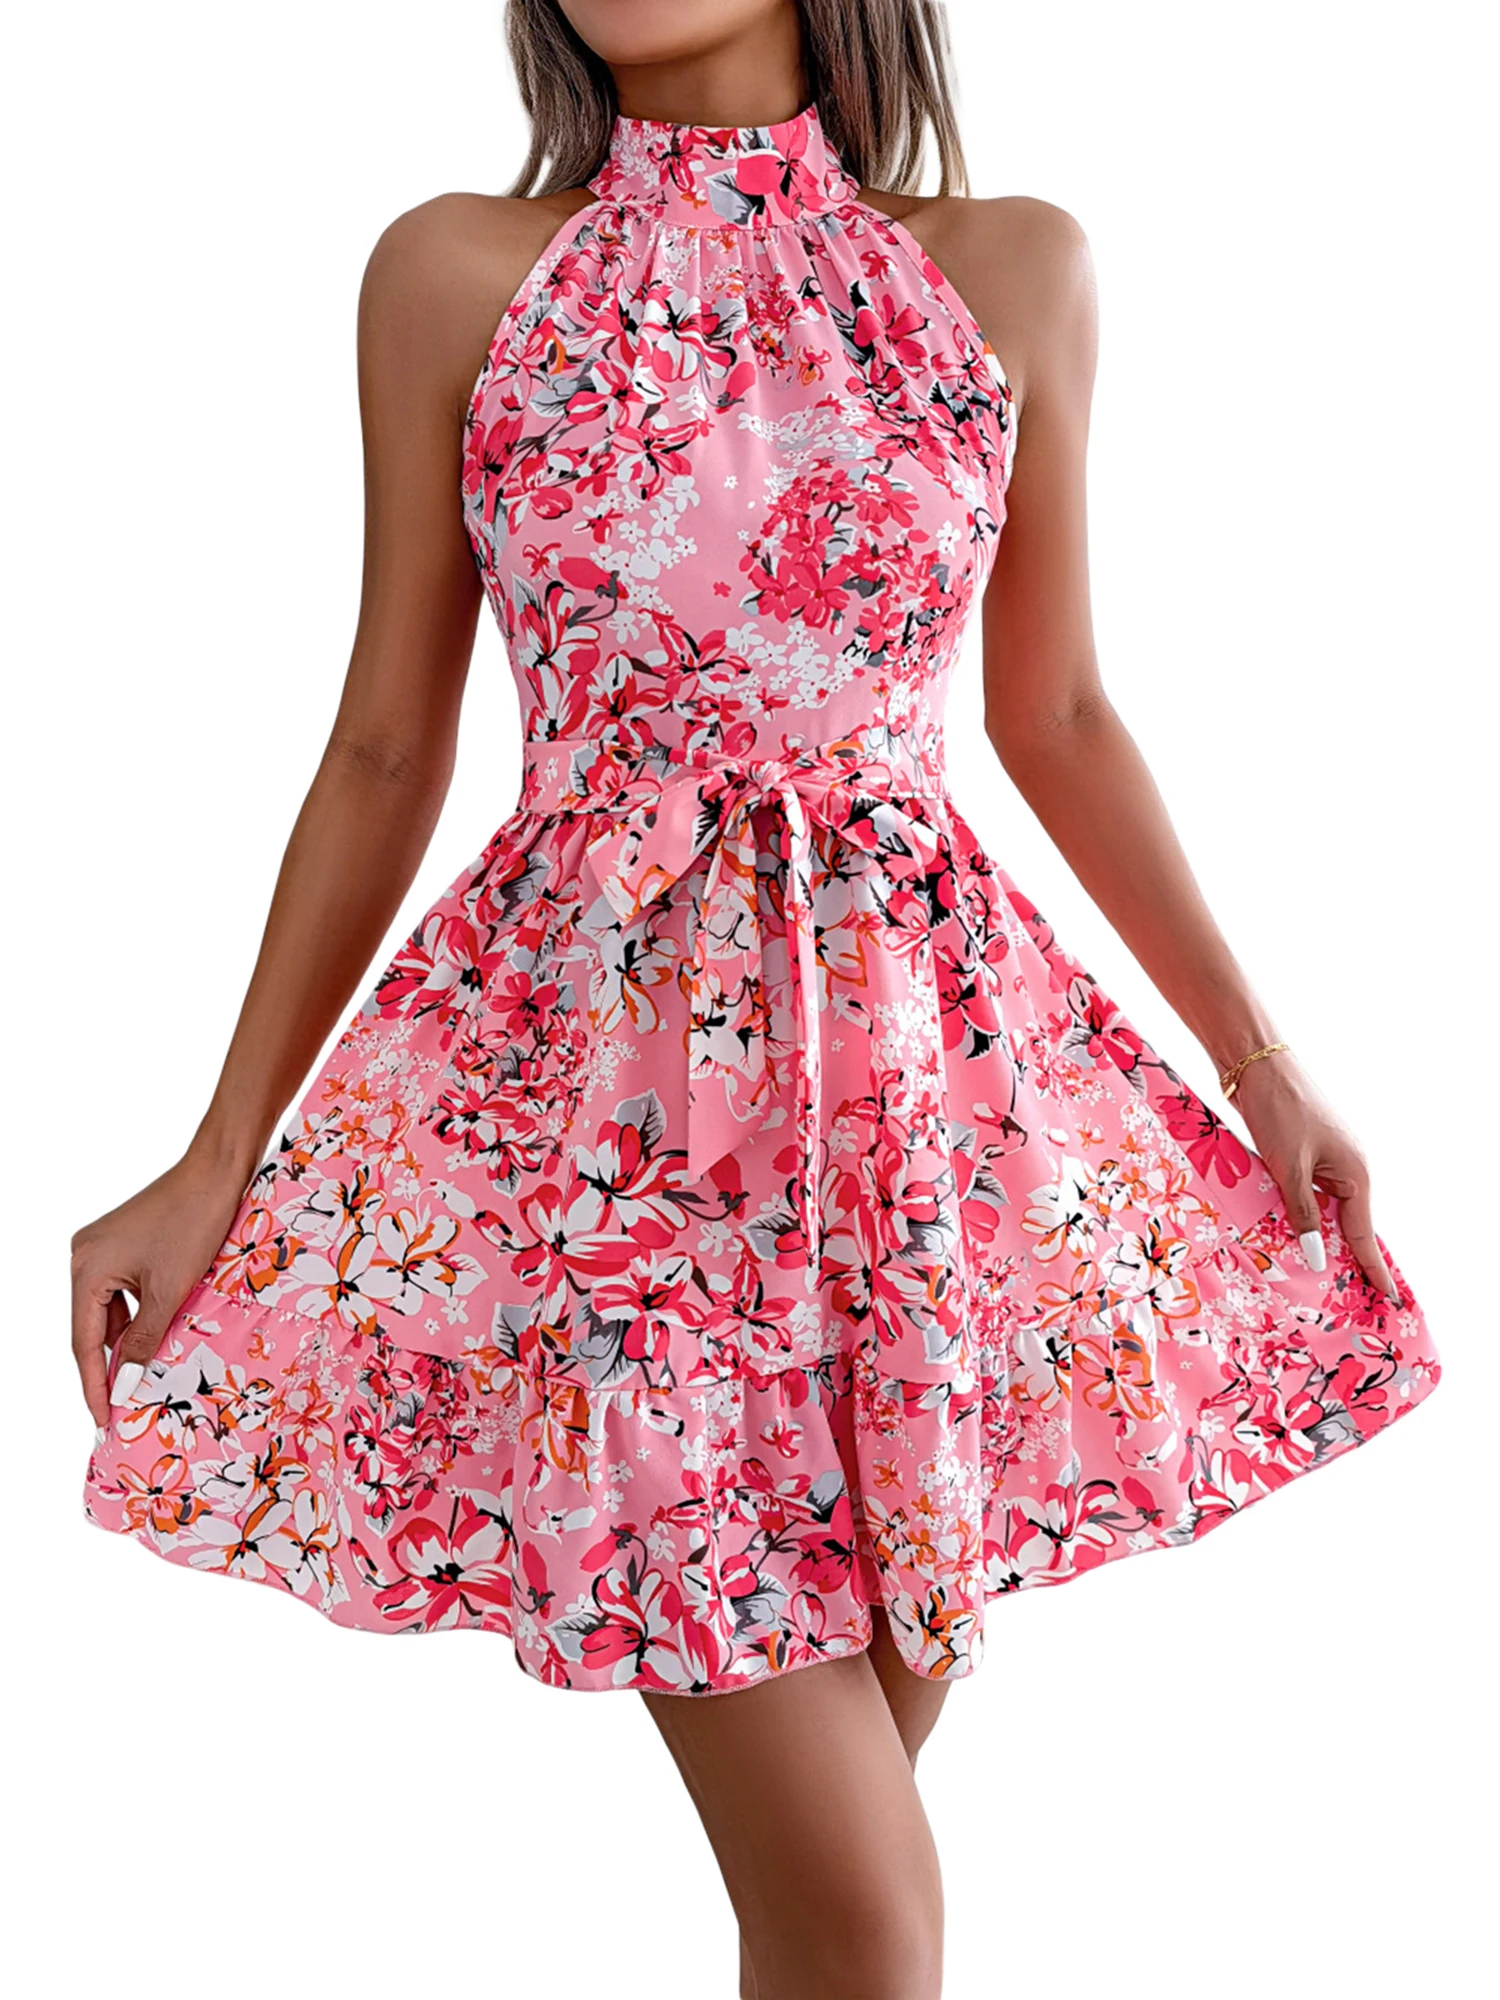 Women Flower Print Ruffled A-line Dress with Belt 2023 New Style Mini Dress Sleeveless High Neck vestido fiesta noche mujer